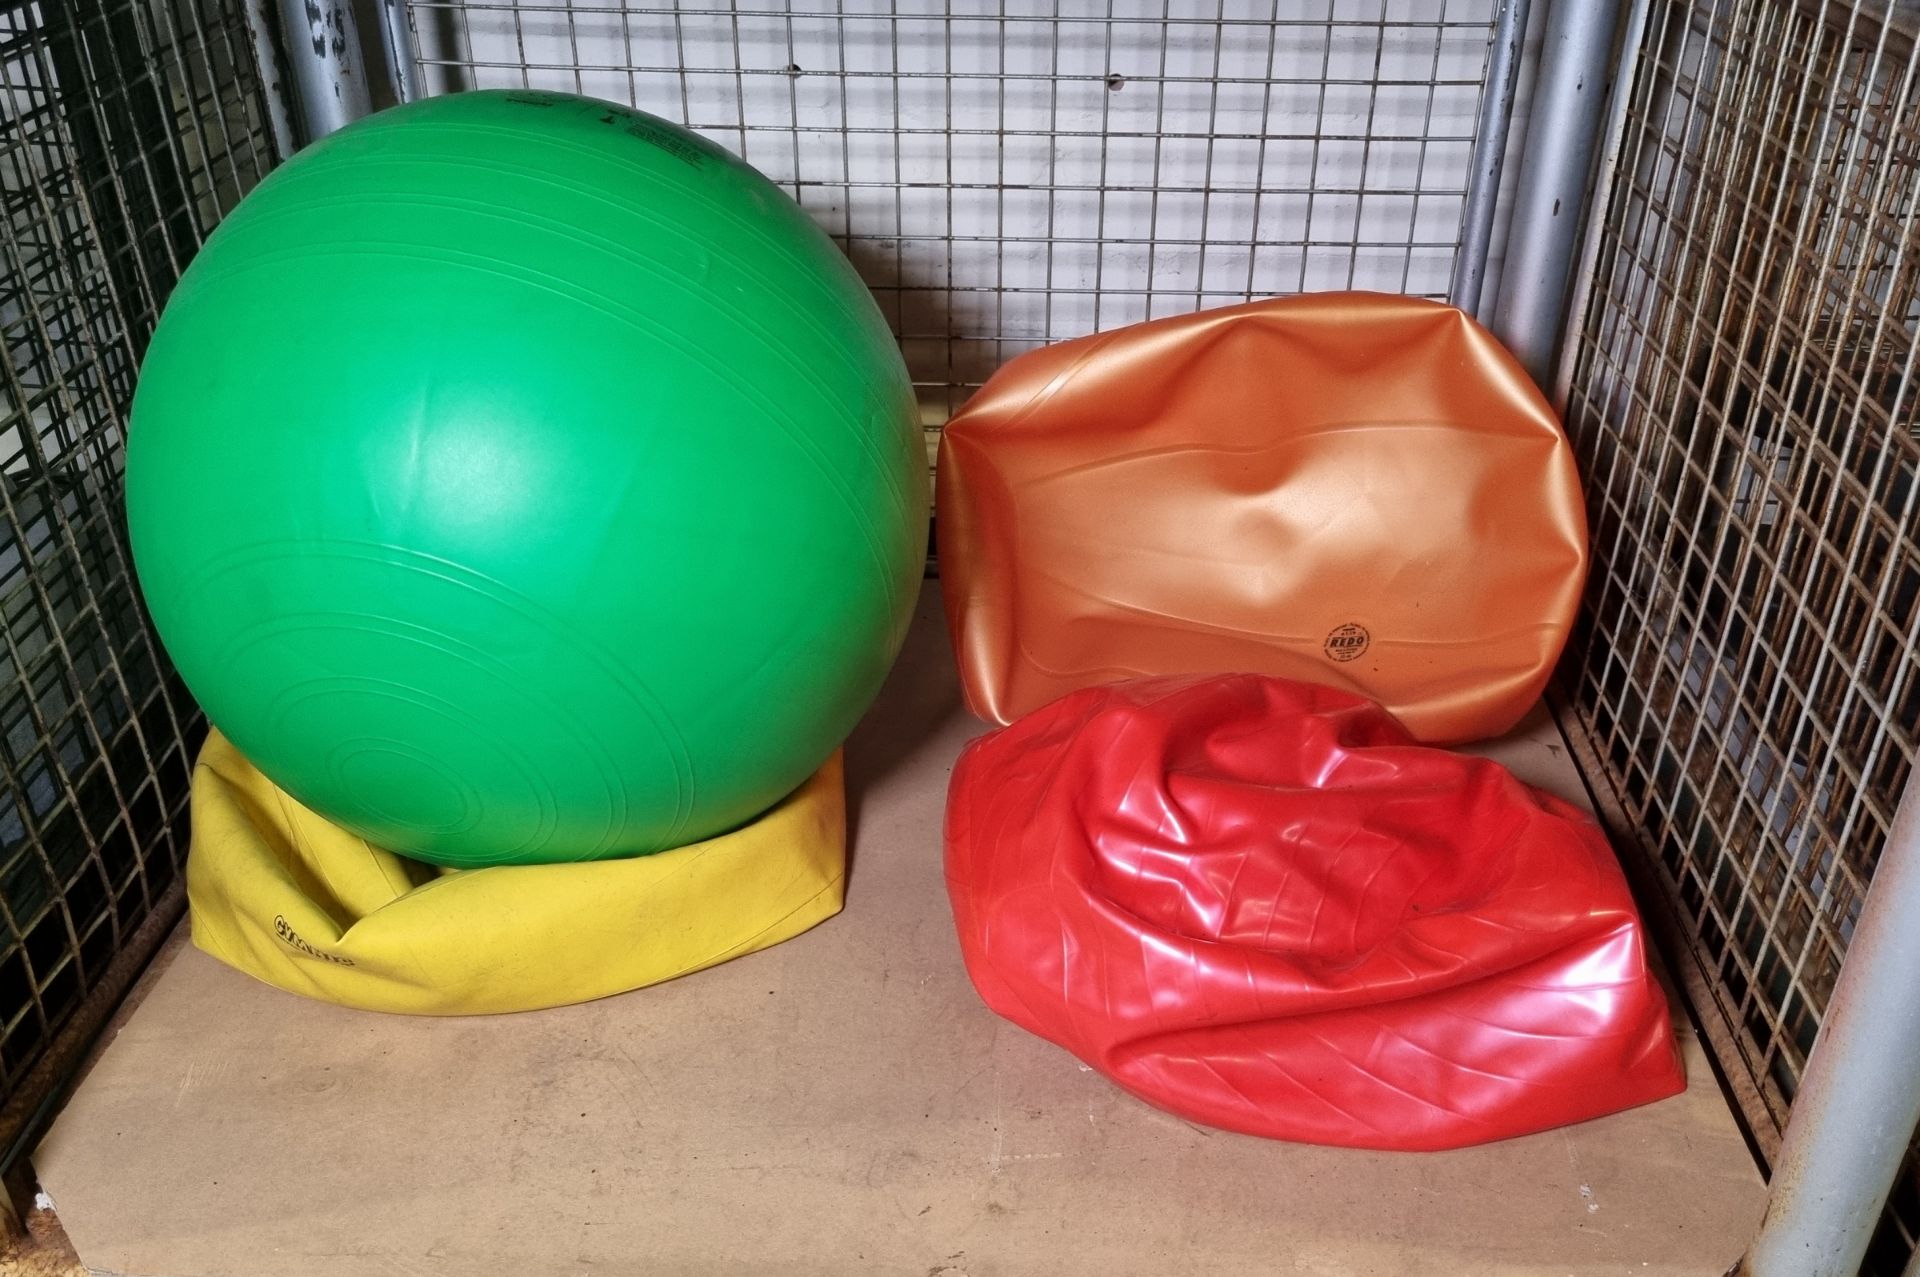 5x Swiss rubber exercise balls - 3x 55 cm, 1x 65 cm, 1x 75 cm - Image 2 of 4